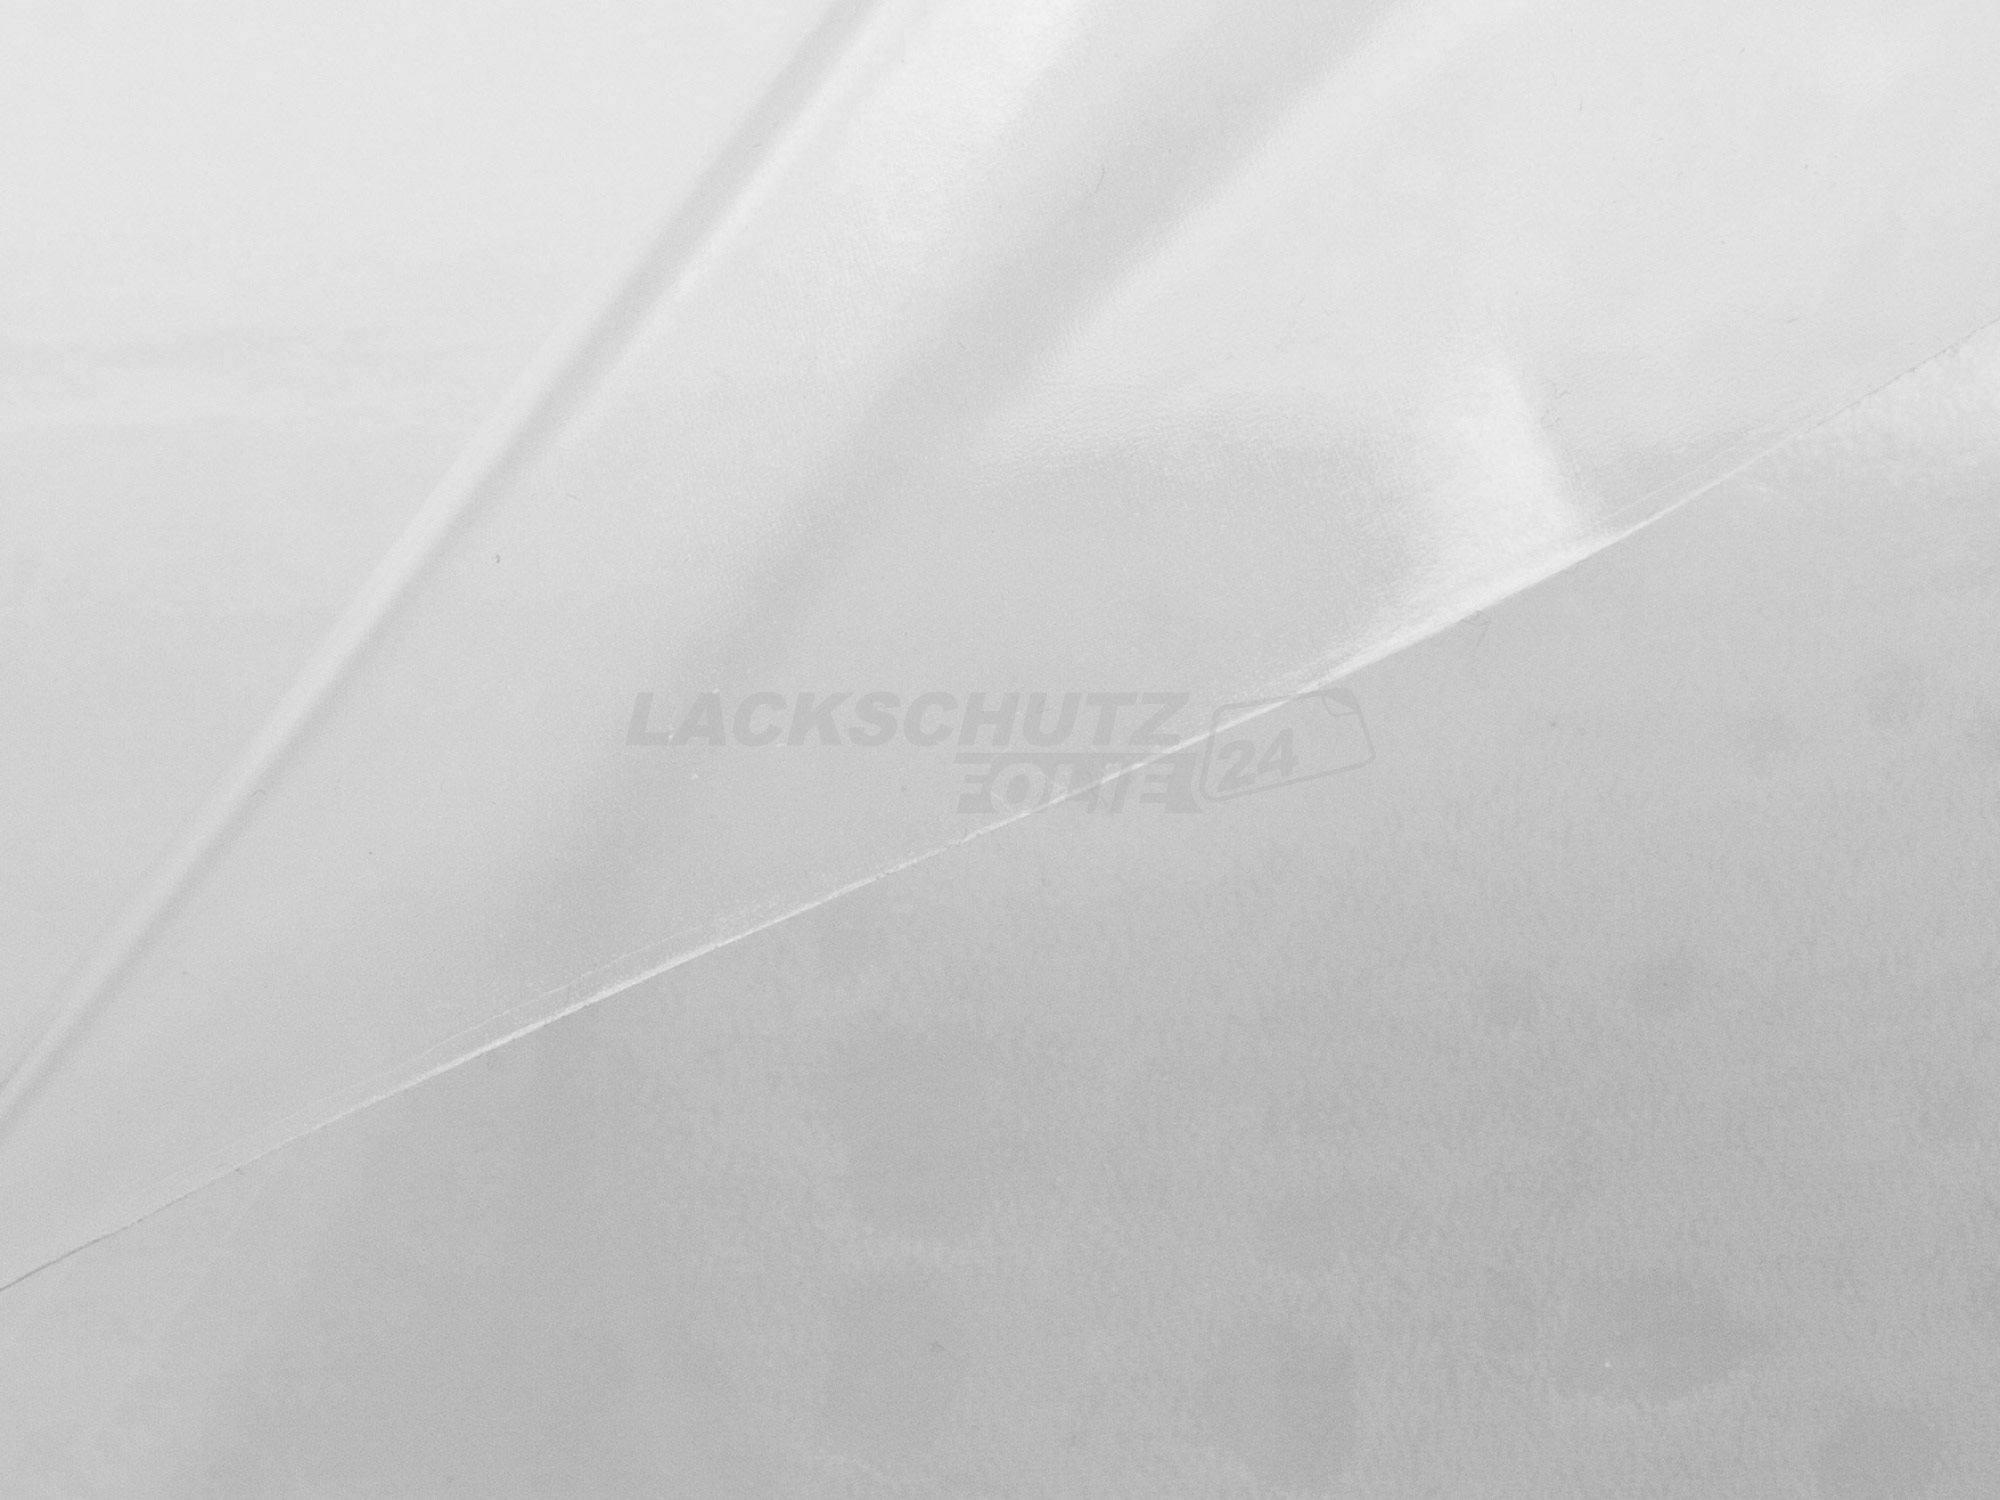 Ladekantenschutzfolie - Transparent Glatt Hochglänzend 240 µm stark für Audi A4 Avant (Kombi) B8, Typ 8K, BJ 05/2008-11/2011